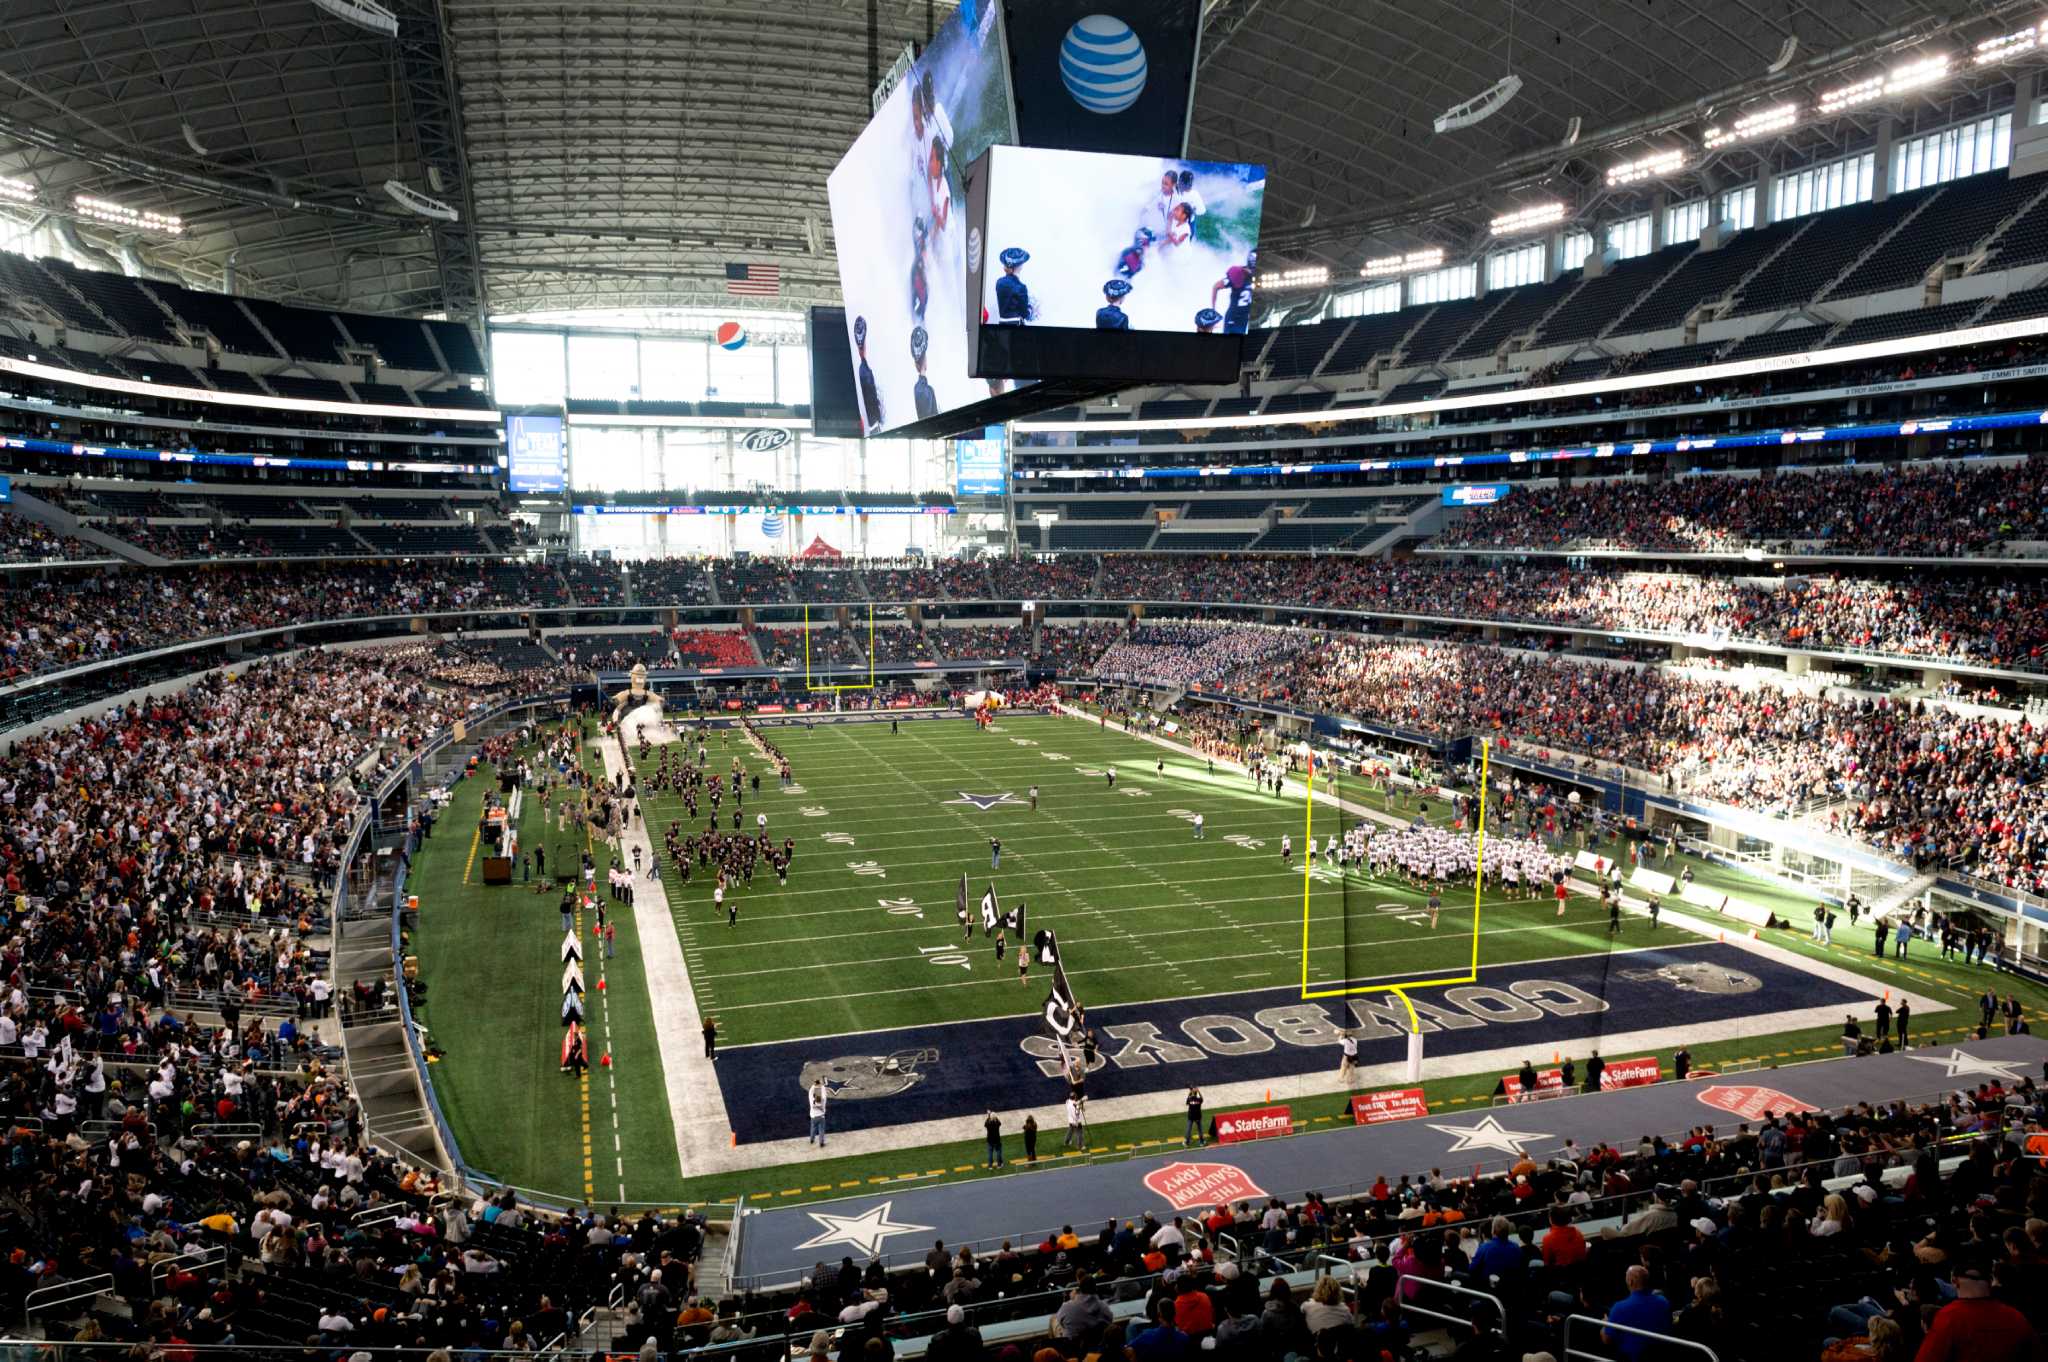 UIL state football finals return to AT&T Stadium - San Antonio Express-News2048 x 1362